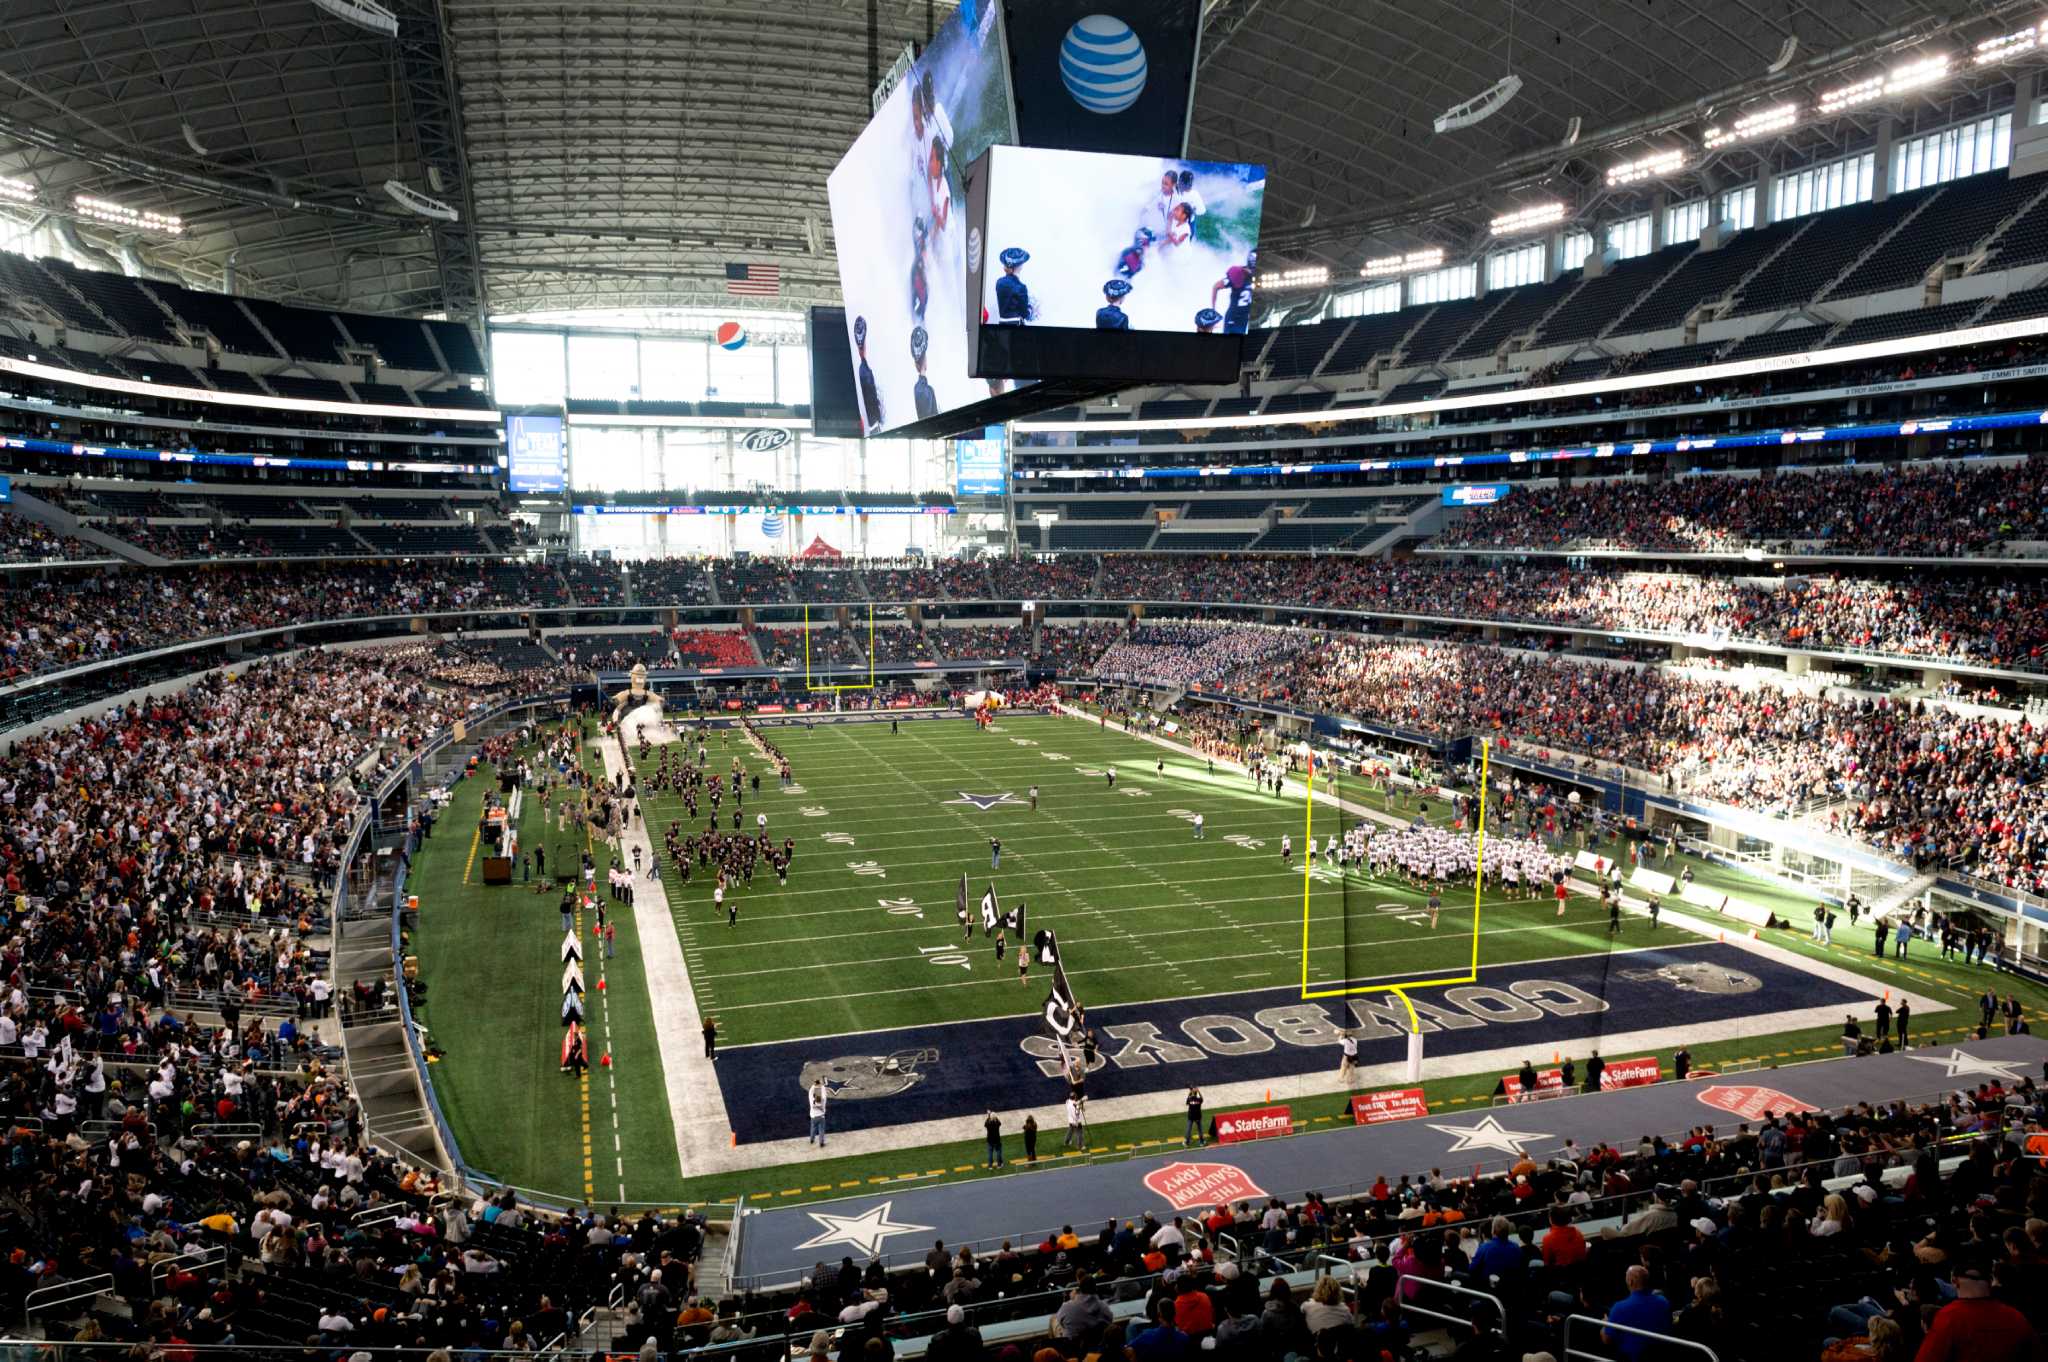 UIL state football finals return to AT&T Stadium - San Antonio Express-News2048 x 1362